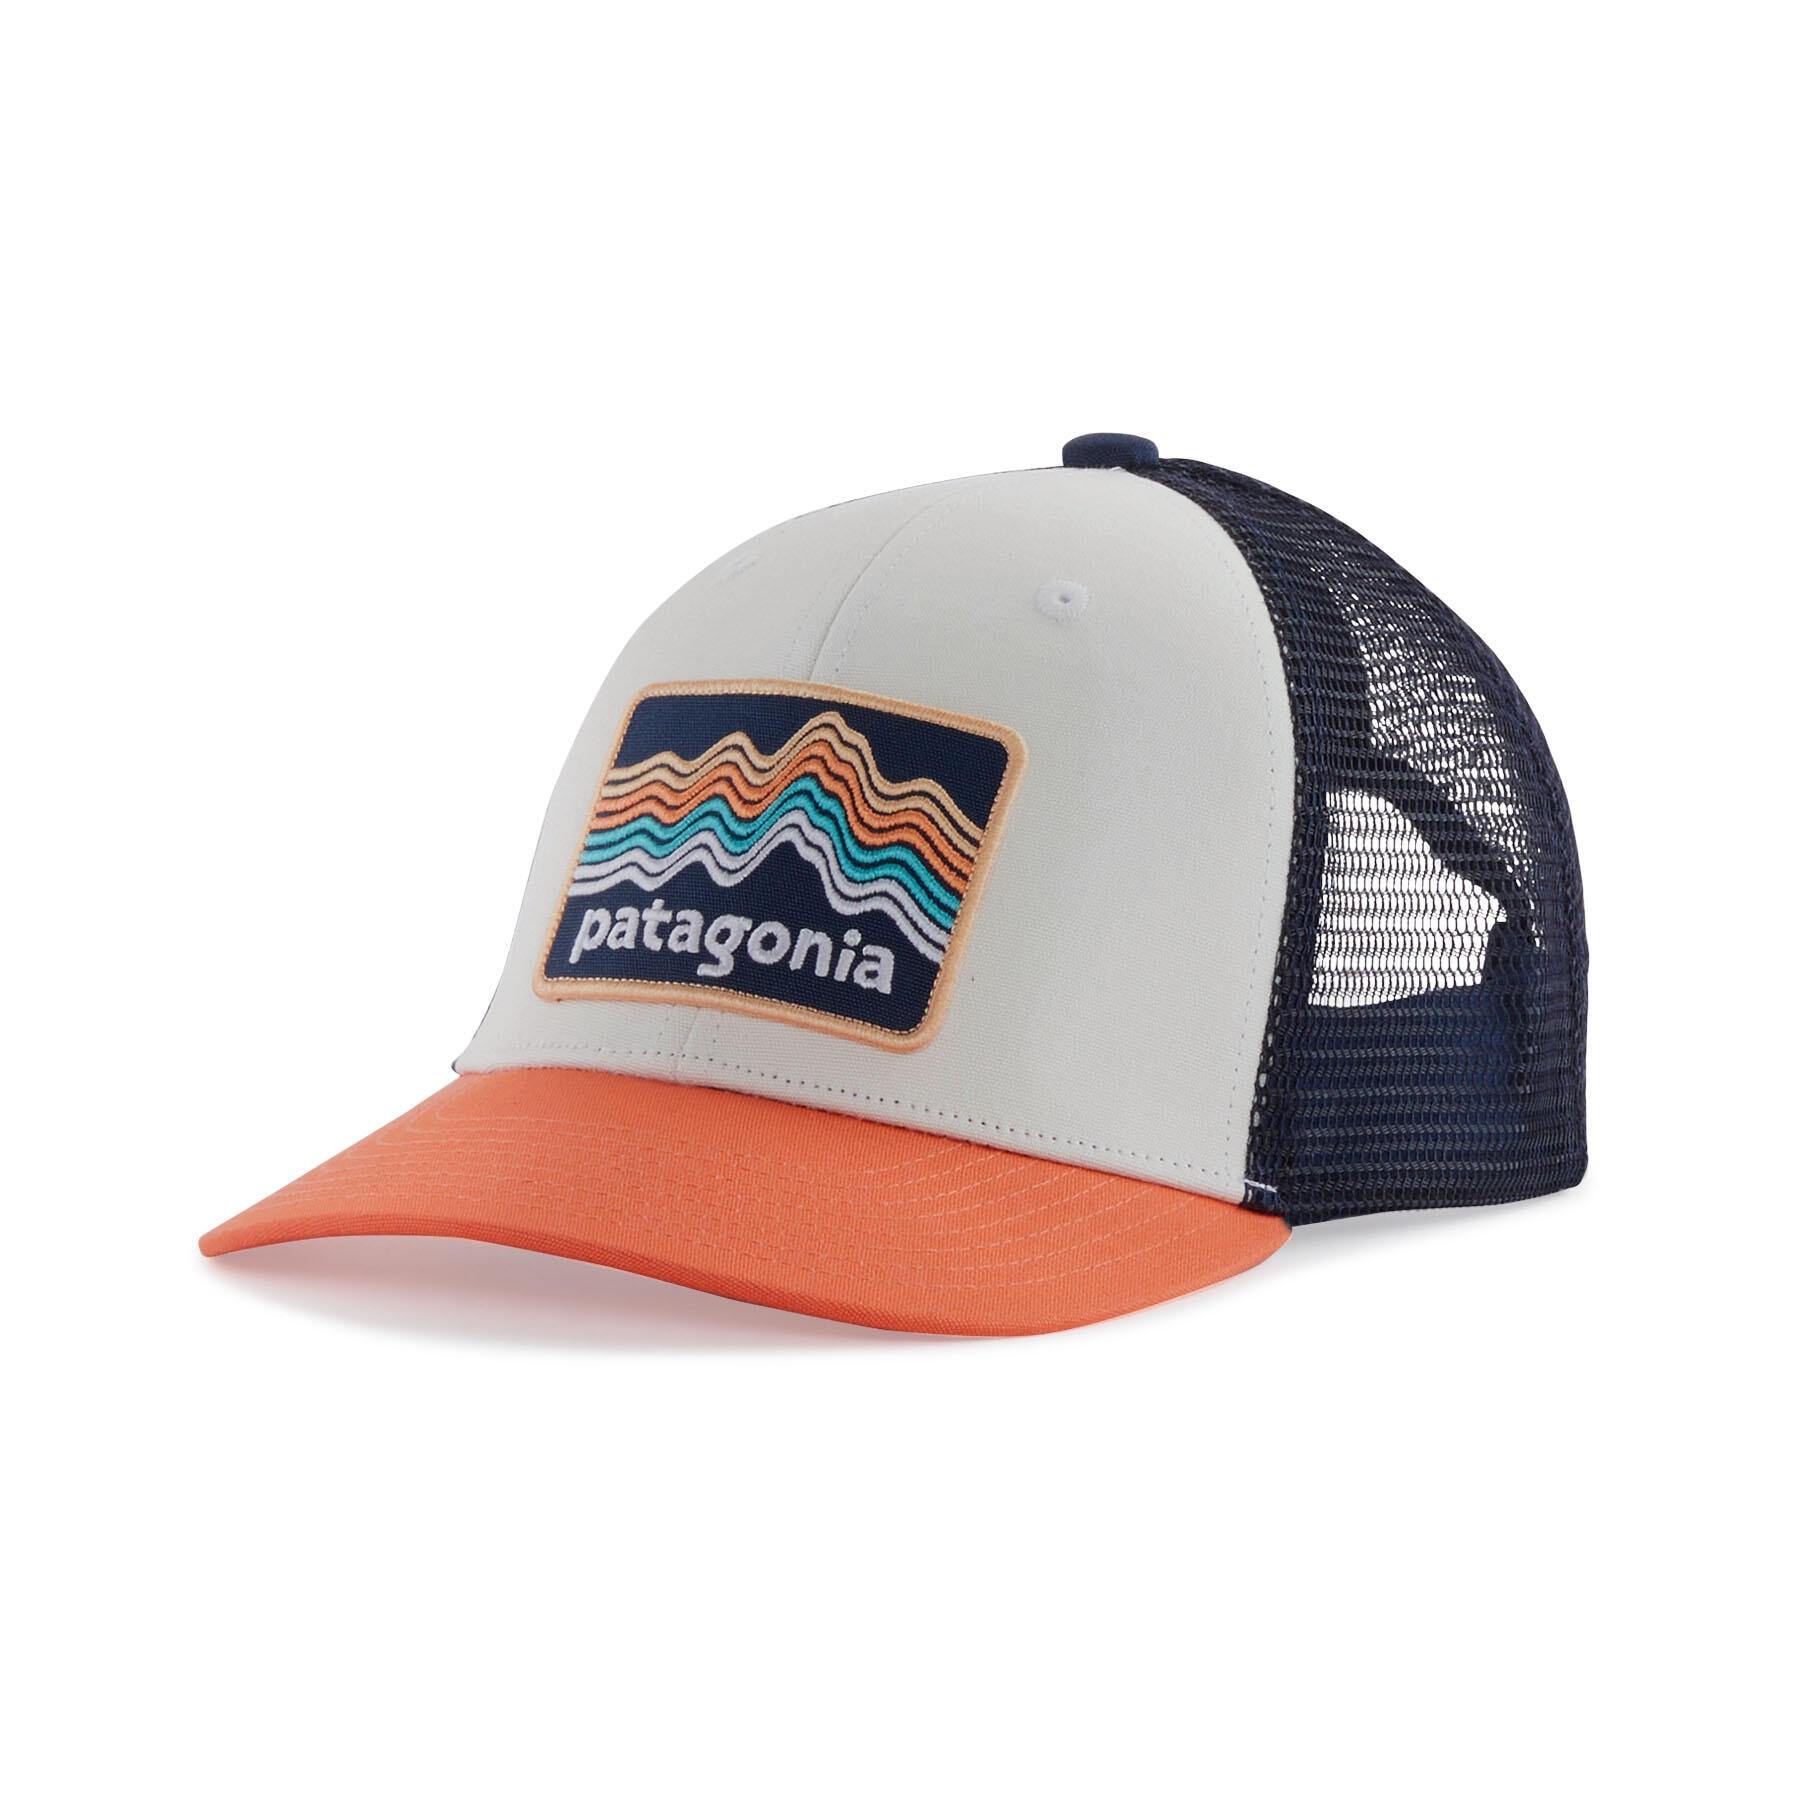 Patagonia Kids Trucker hat